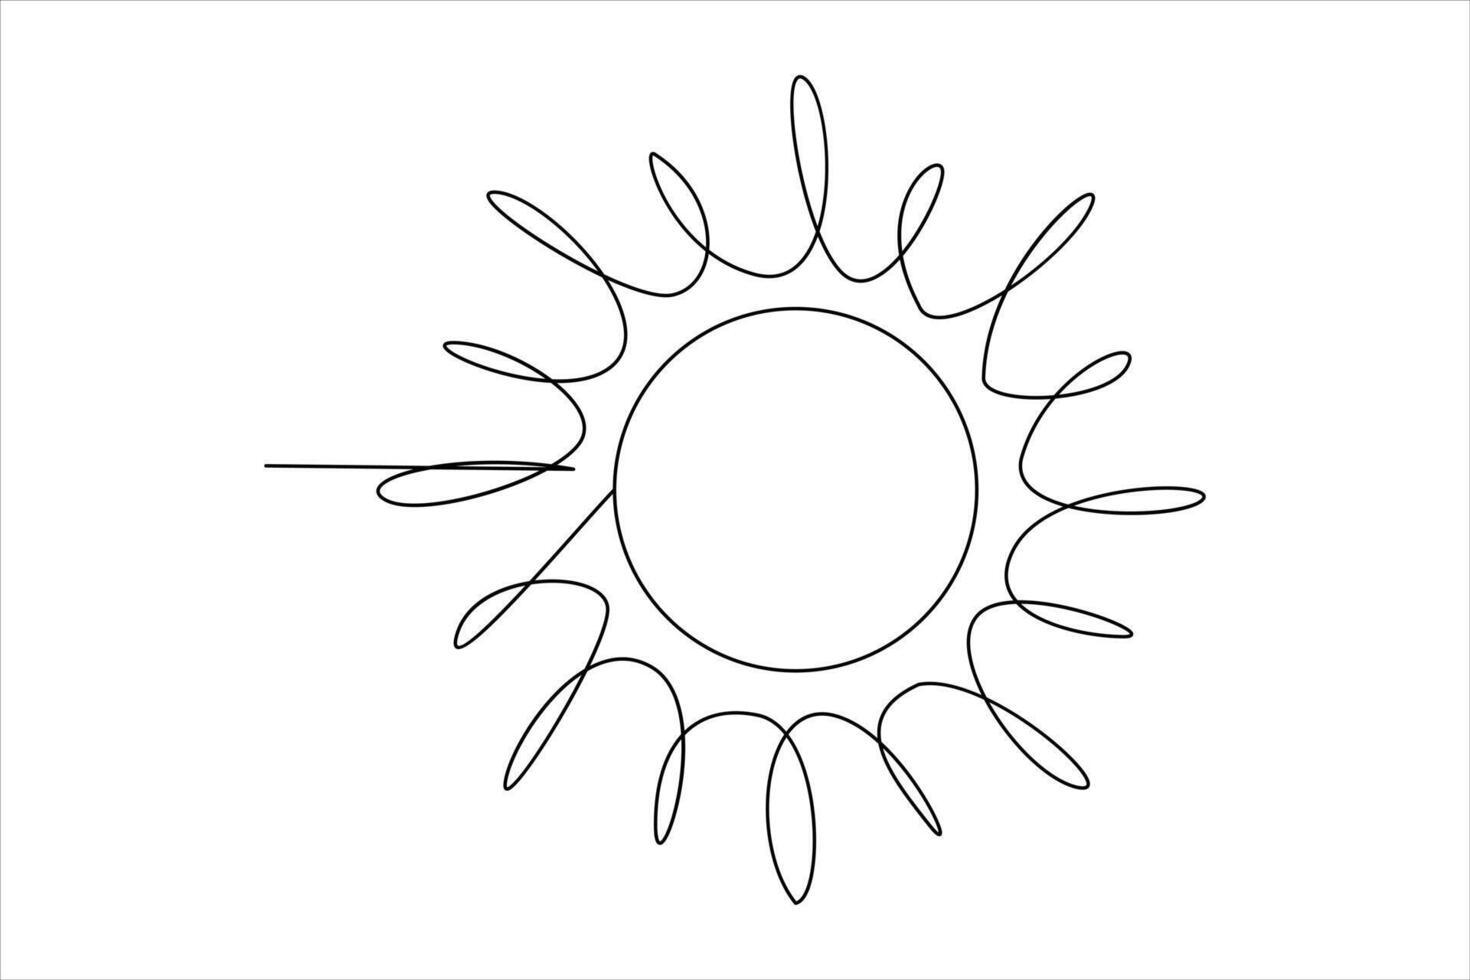 continuous one line drawing sun art Summer sun contour line sign line art illustration vector